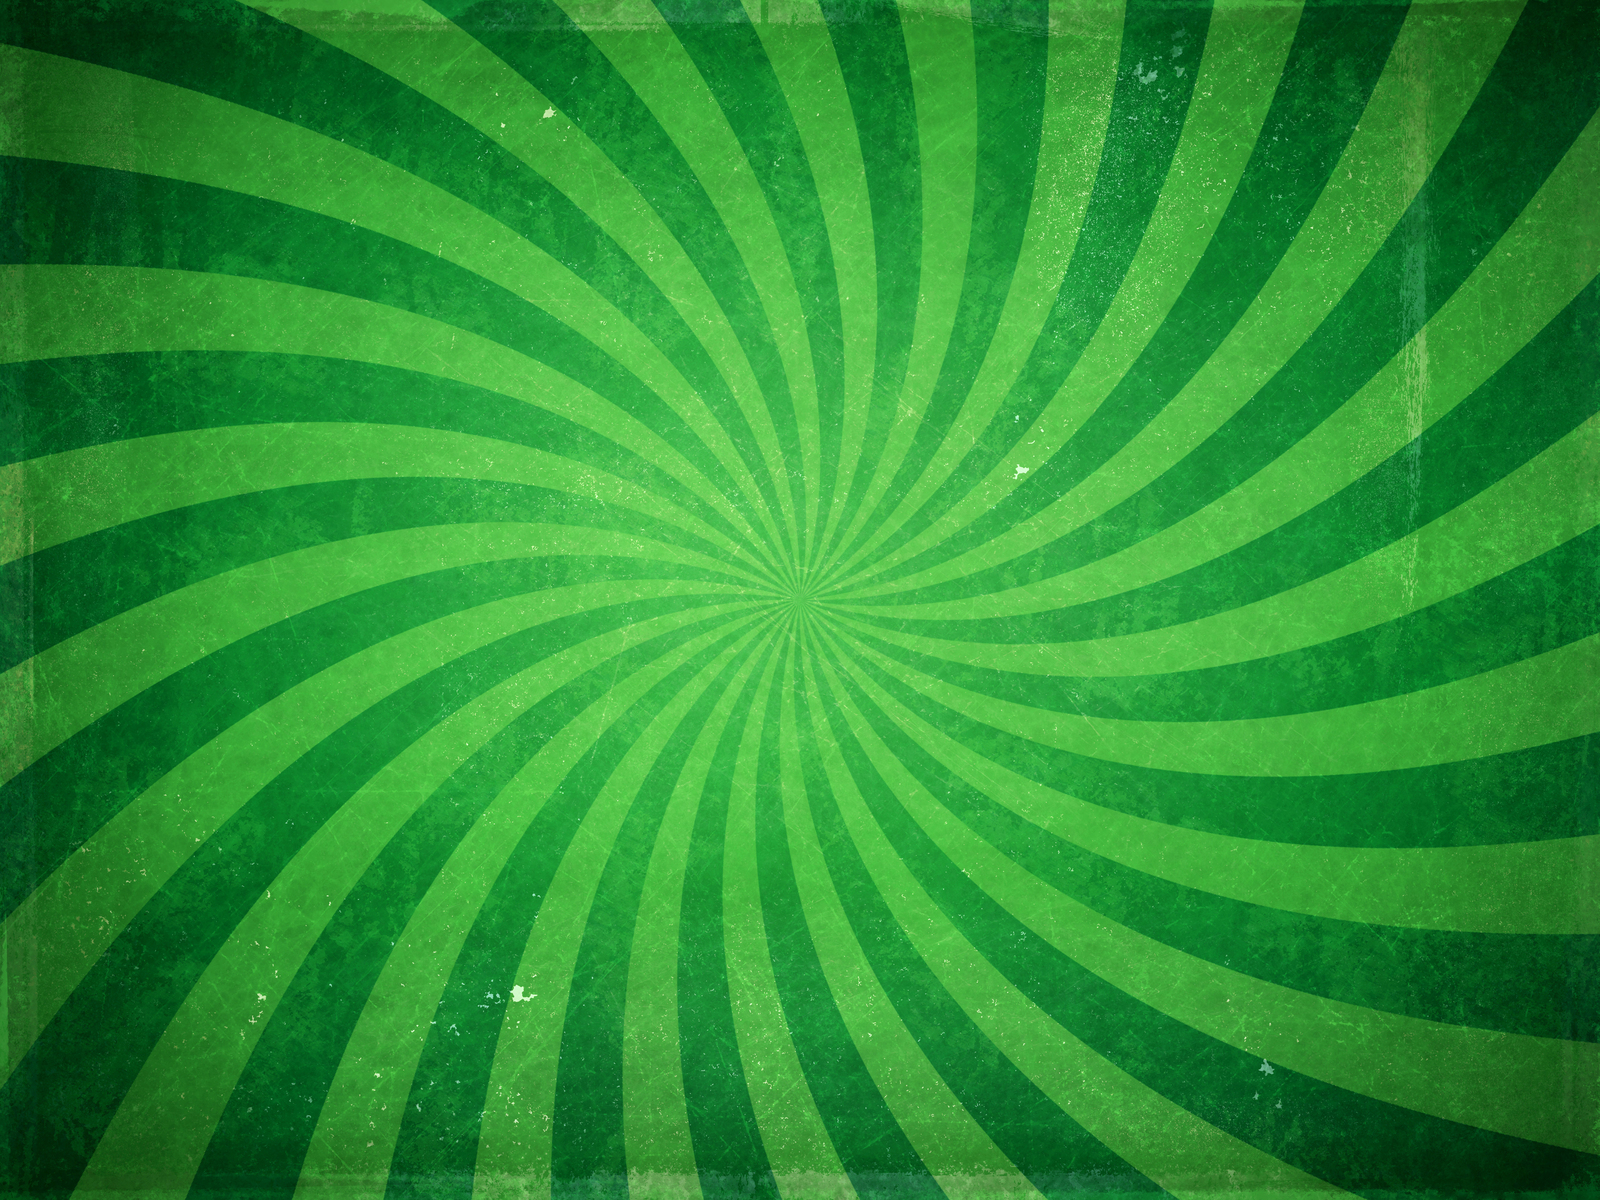 8 Grunge Swirl Vector Images